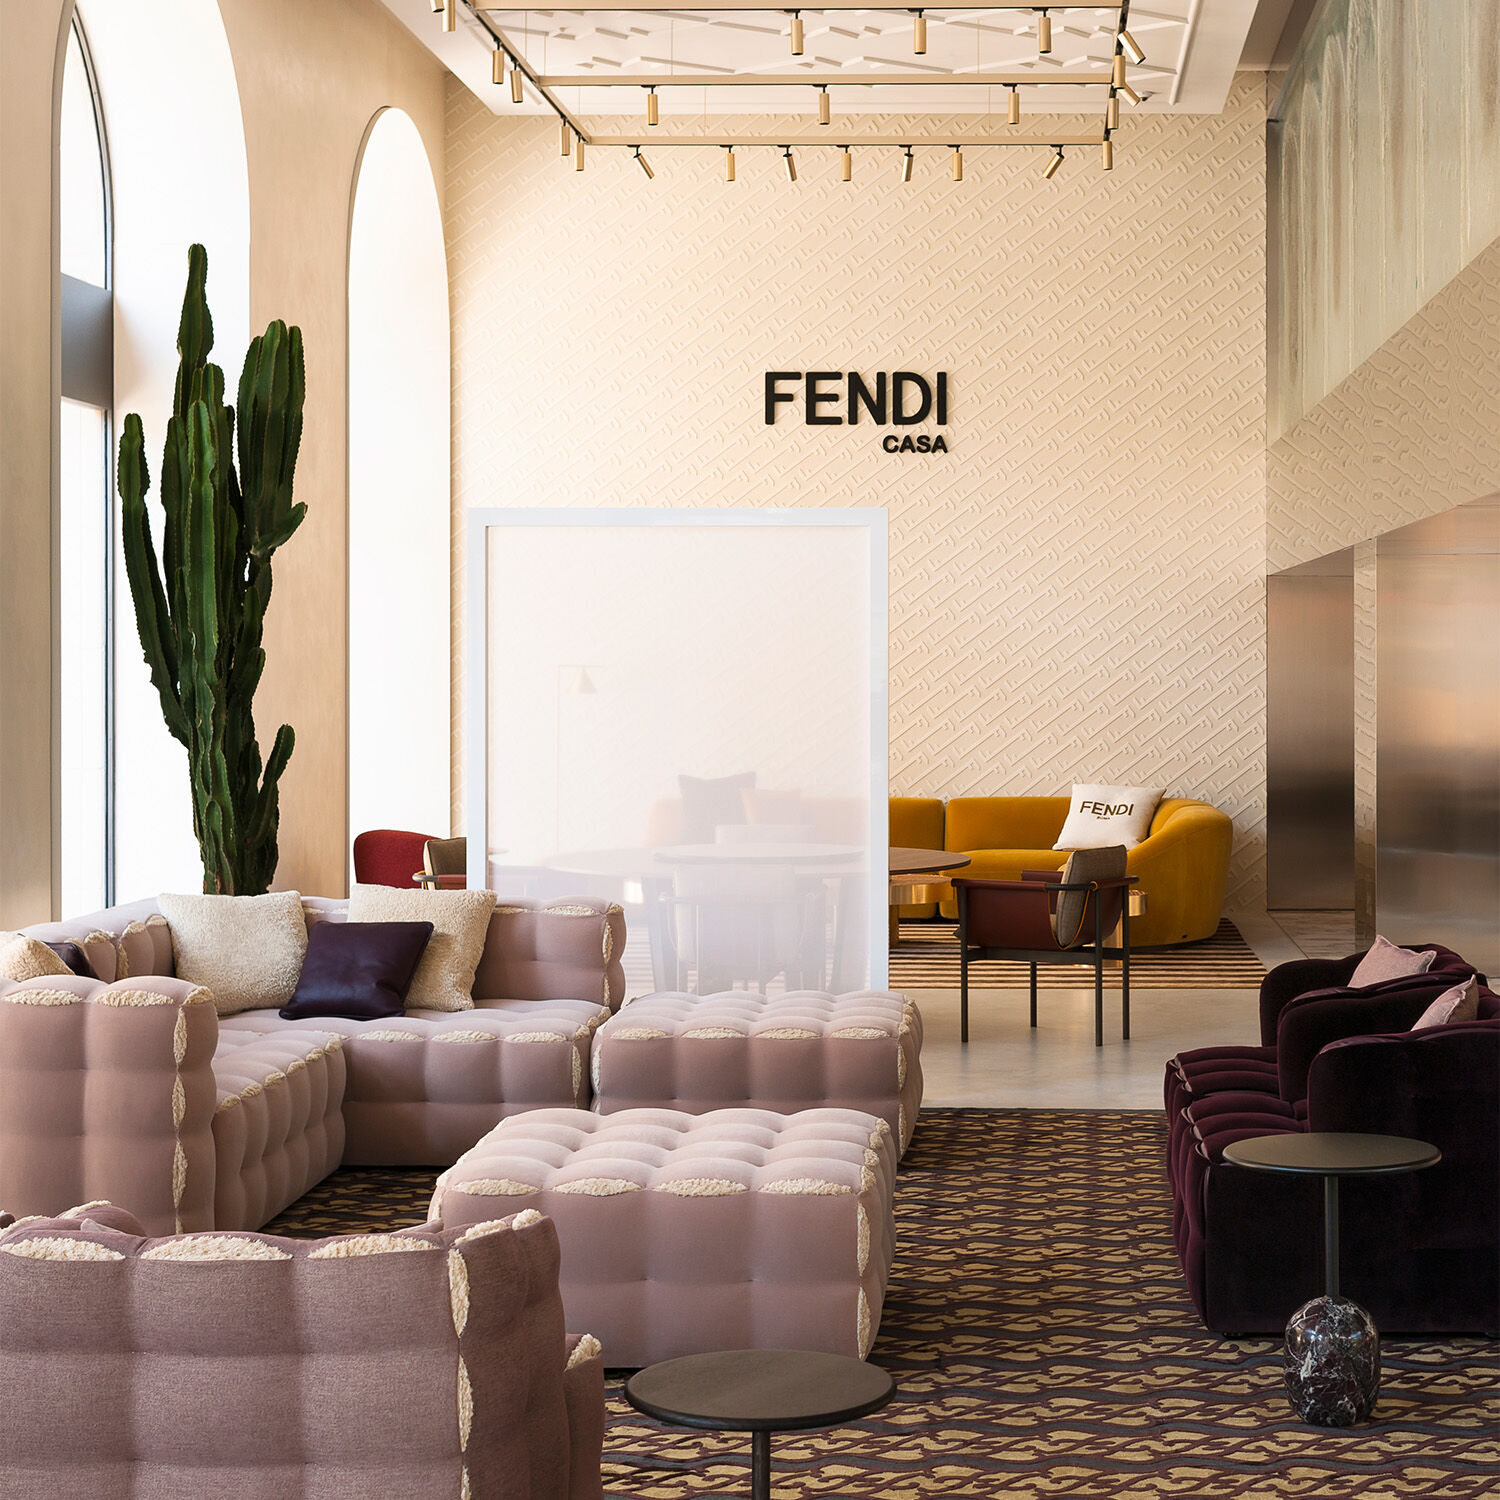 Fendi Casa, Milan